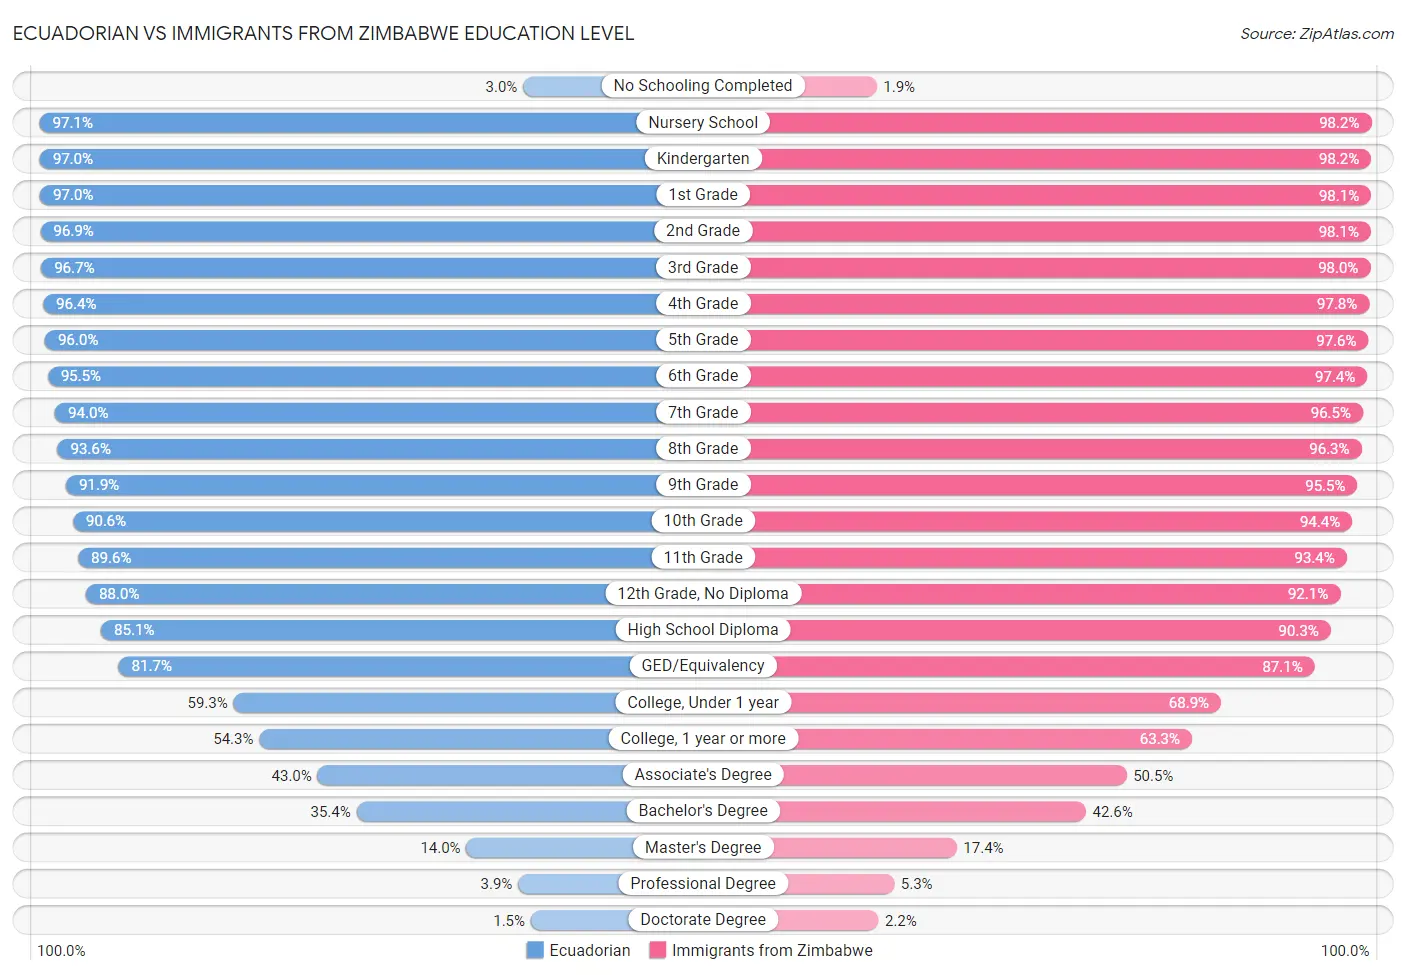 Ecuadorian vs Immigrants from Zimbabwe Education Level